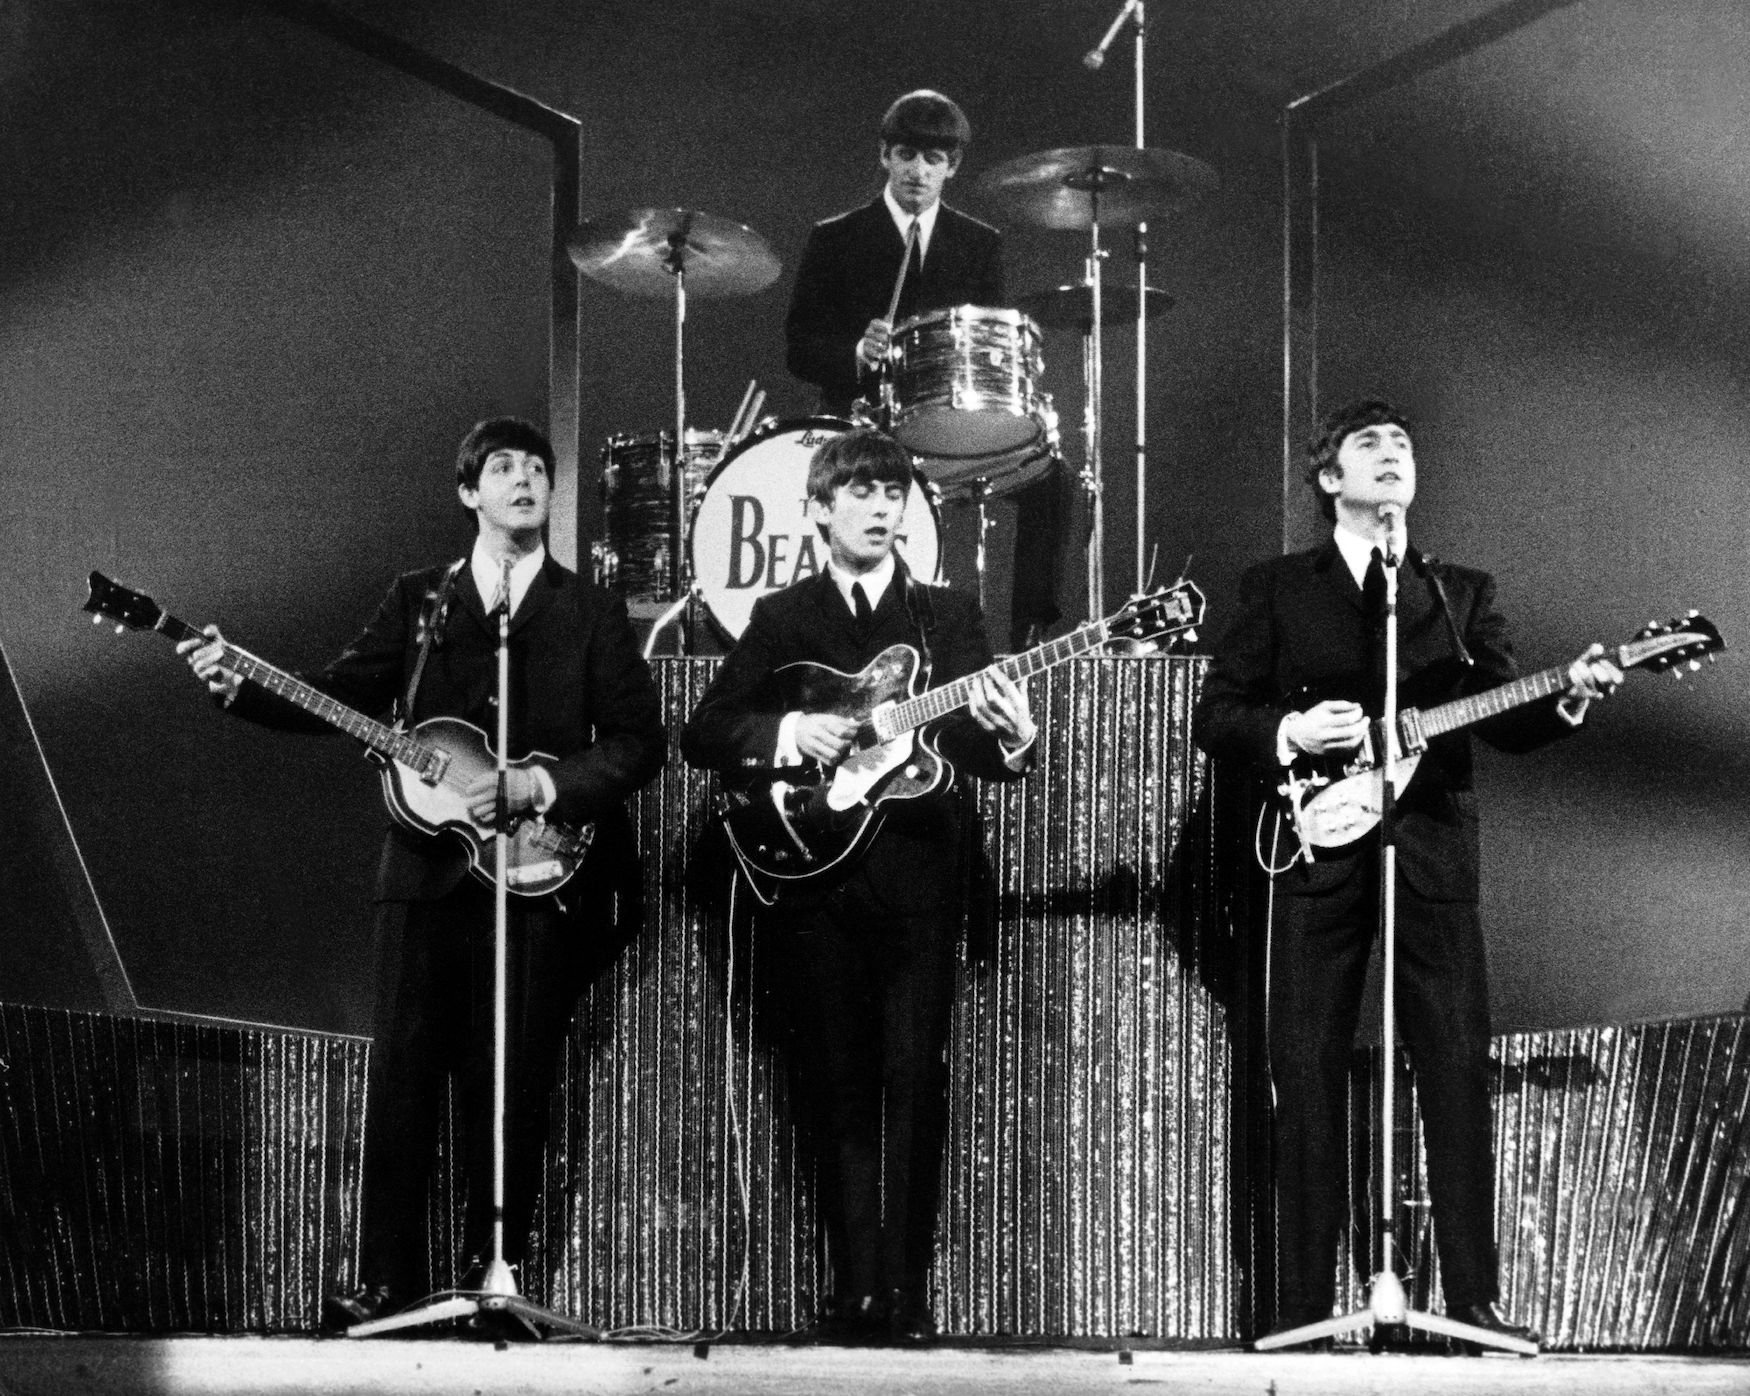 The Beatles perform at the London Palladium